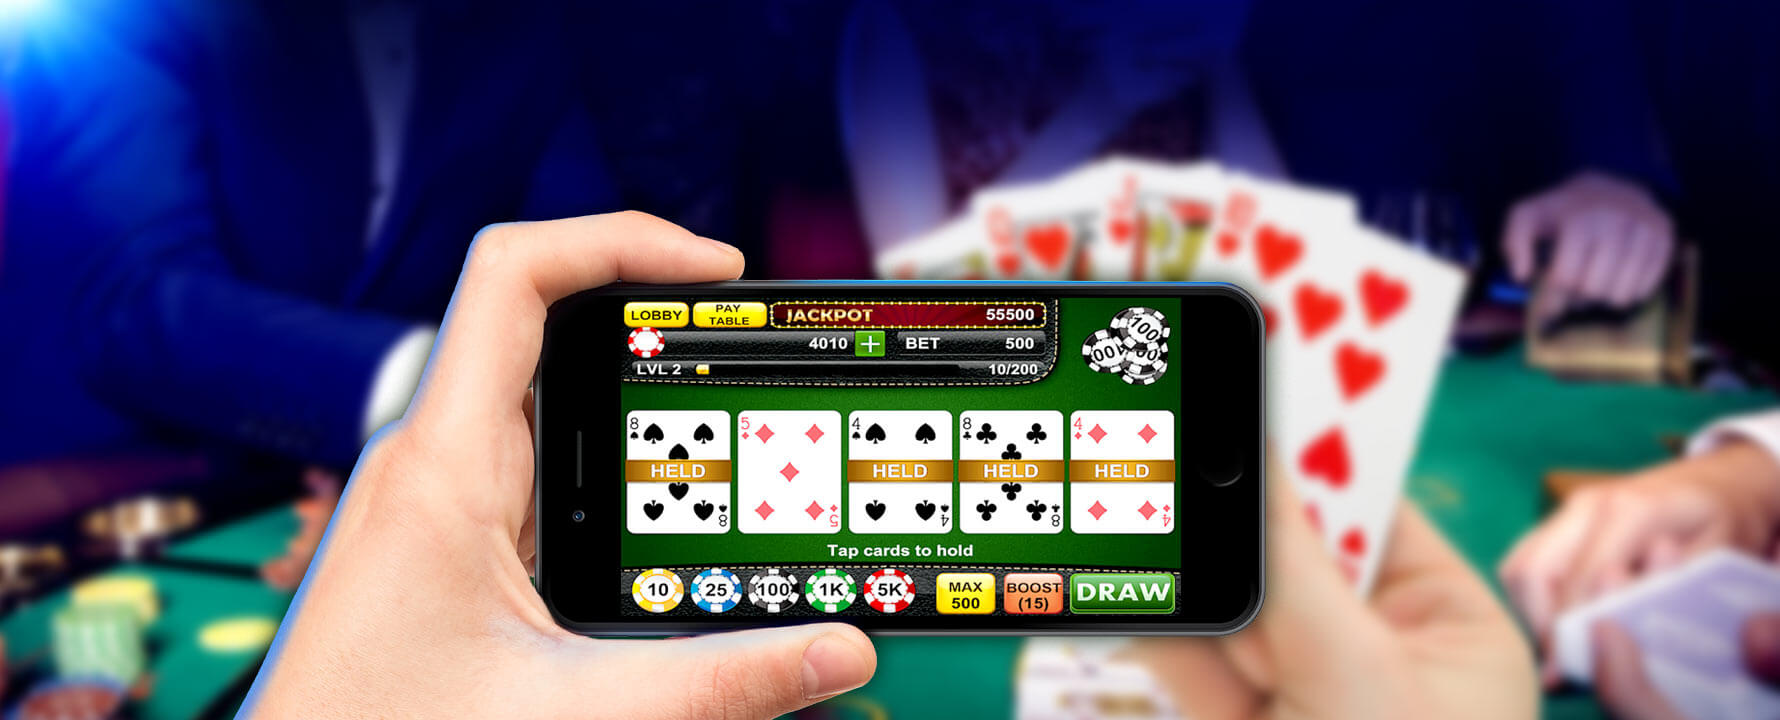 Online casino video poker игровые автоматы крейзи